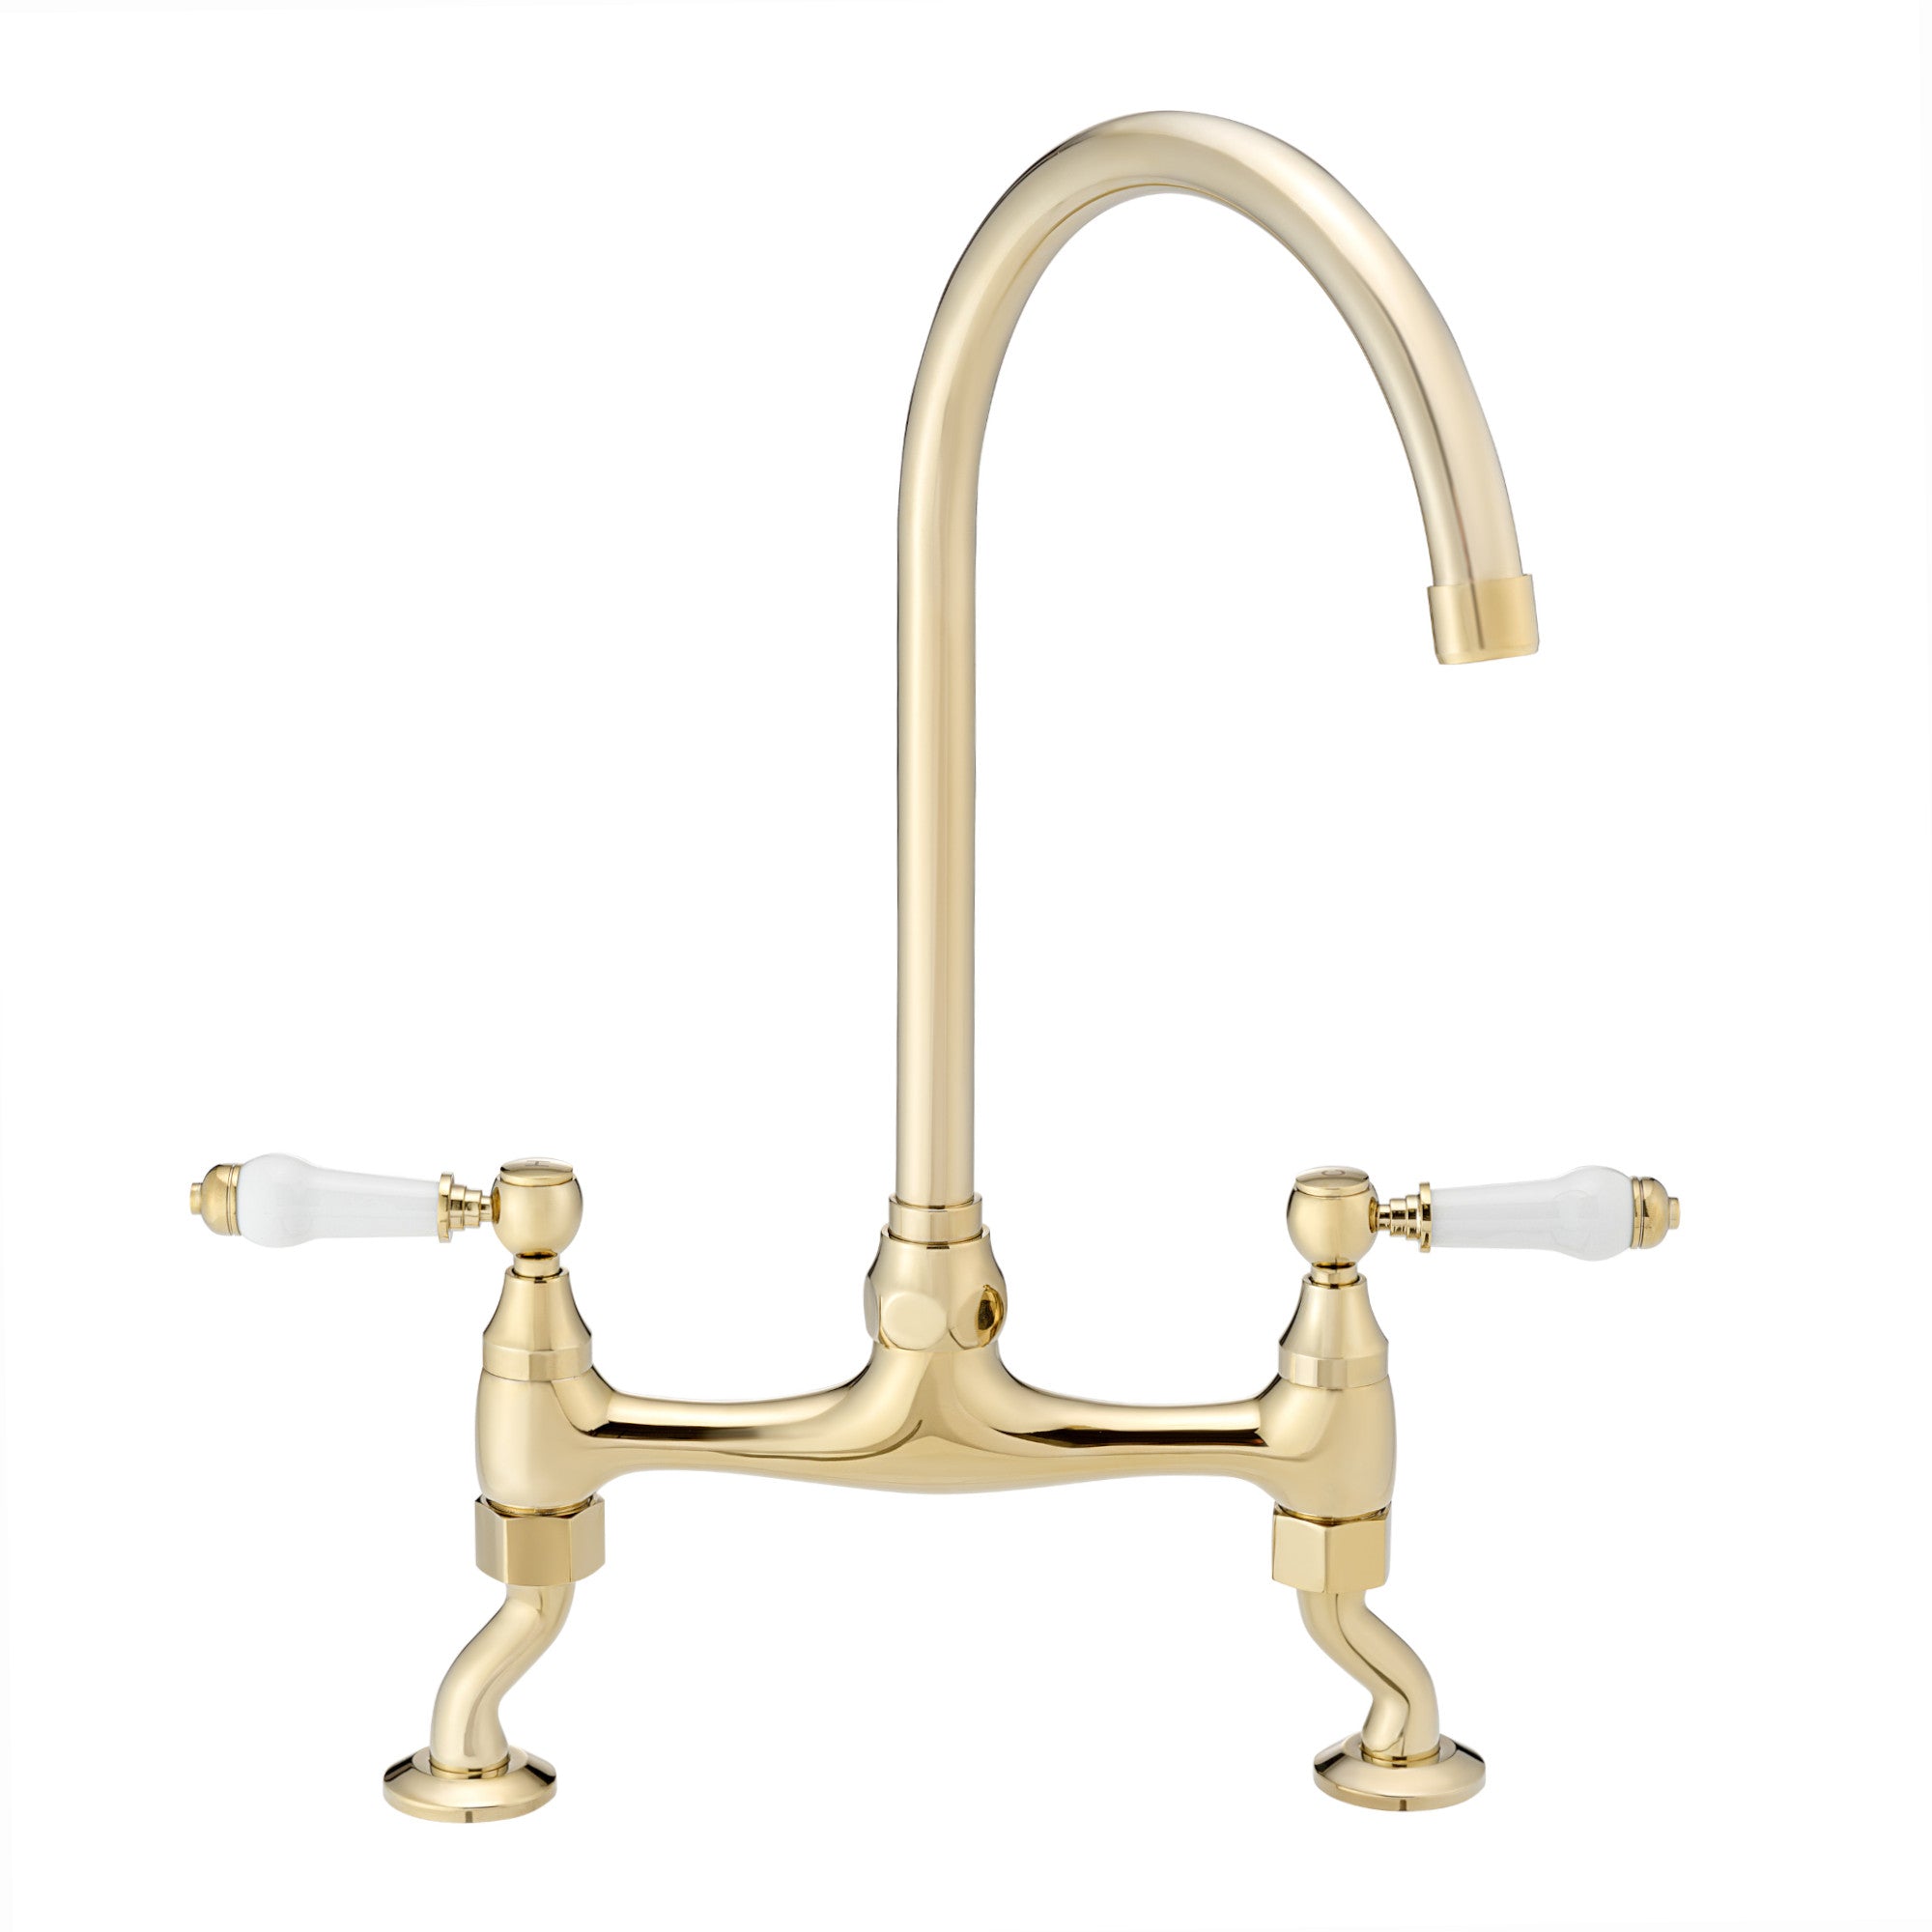 Astbury traditional bridge kitchen mixer  tap with white ceramic levers deck mounted - gold